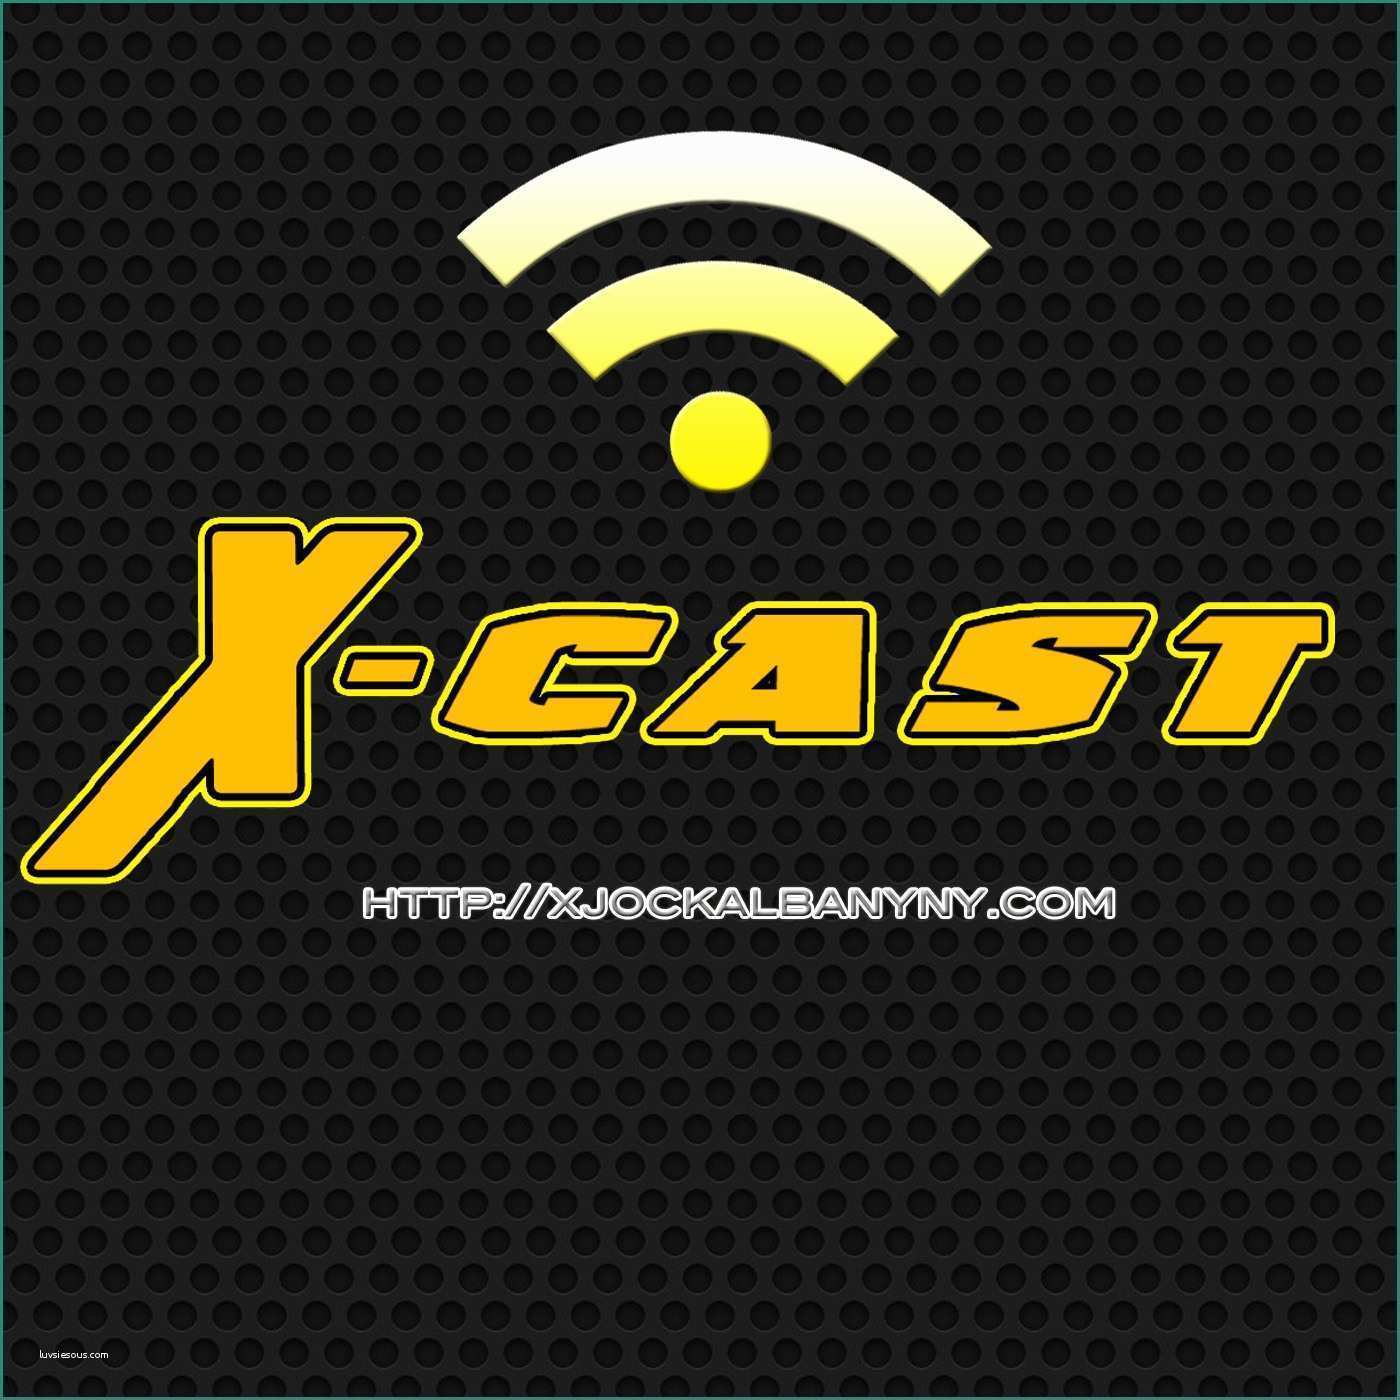 Giochi Degli Alex Amp Co E All Podcasts Dataset X Tsv at Master · Ageitgey All Podcasts Dataset